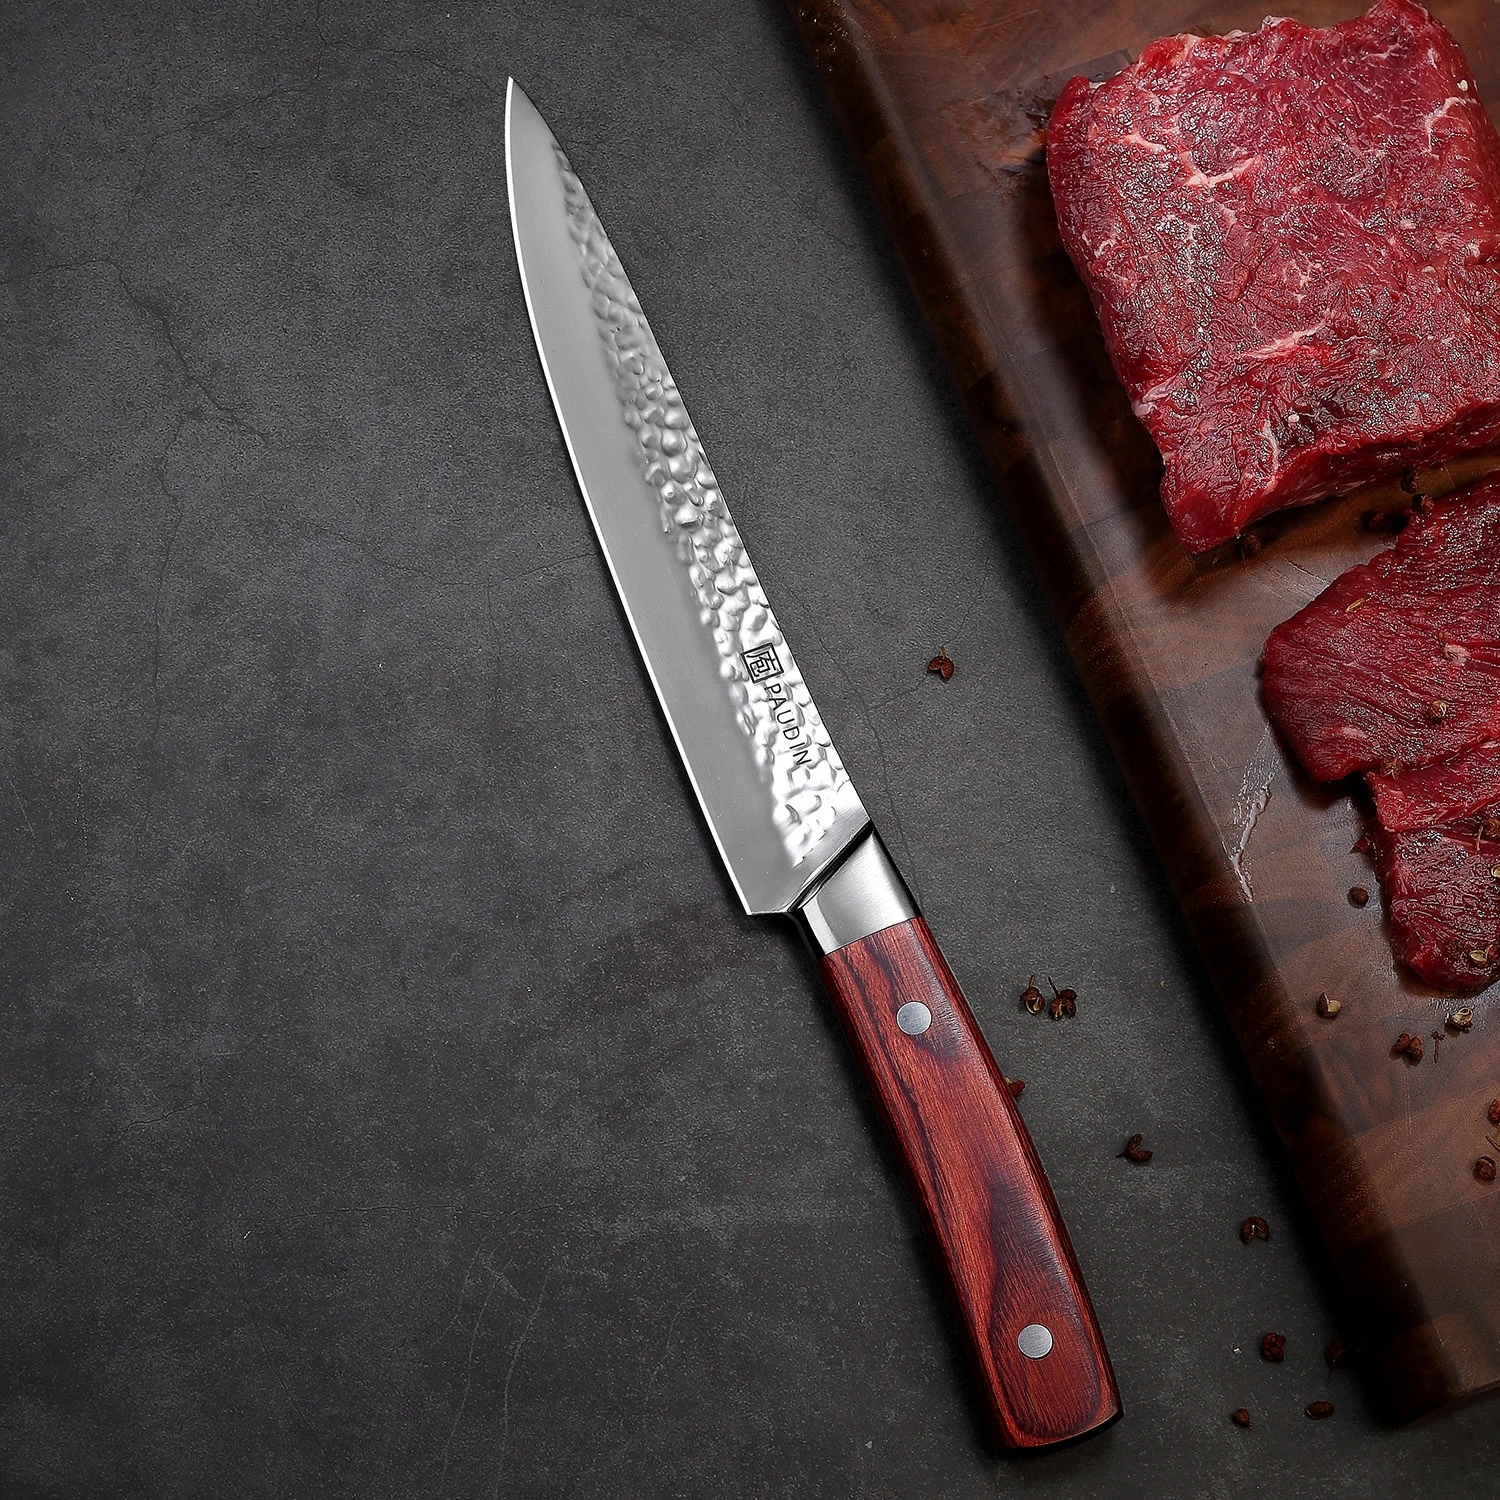 8-inch Hammered Design Wooden Handle Carving Meat Slicing Knife